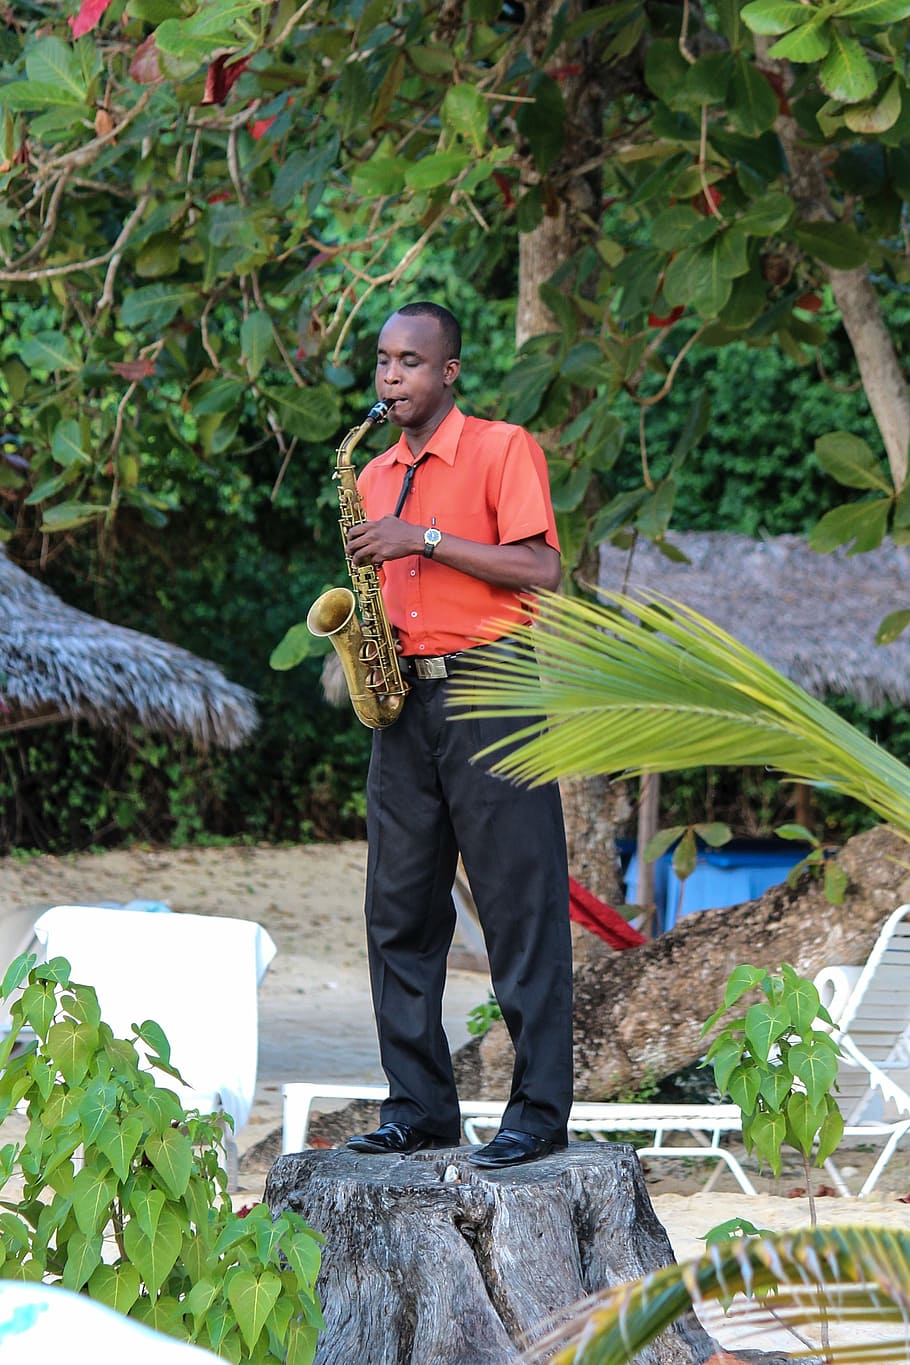 Jamaica, saxofón, música, playa, músico, jazz, jugar, musical, instrumento, sonido